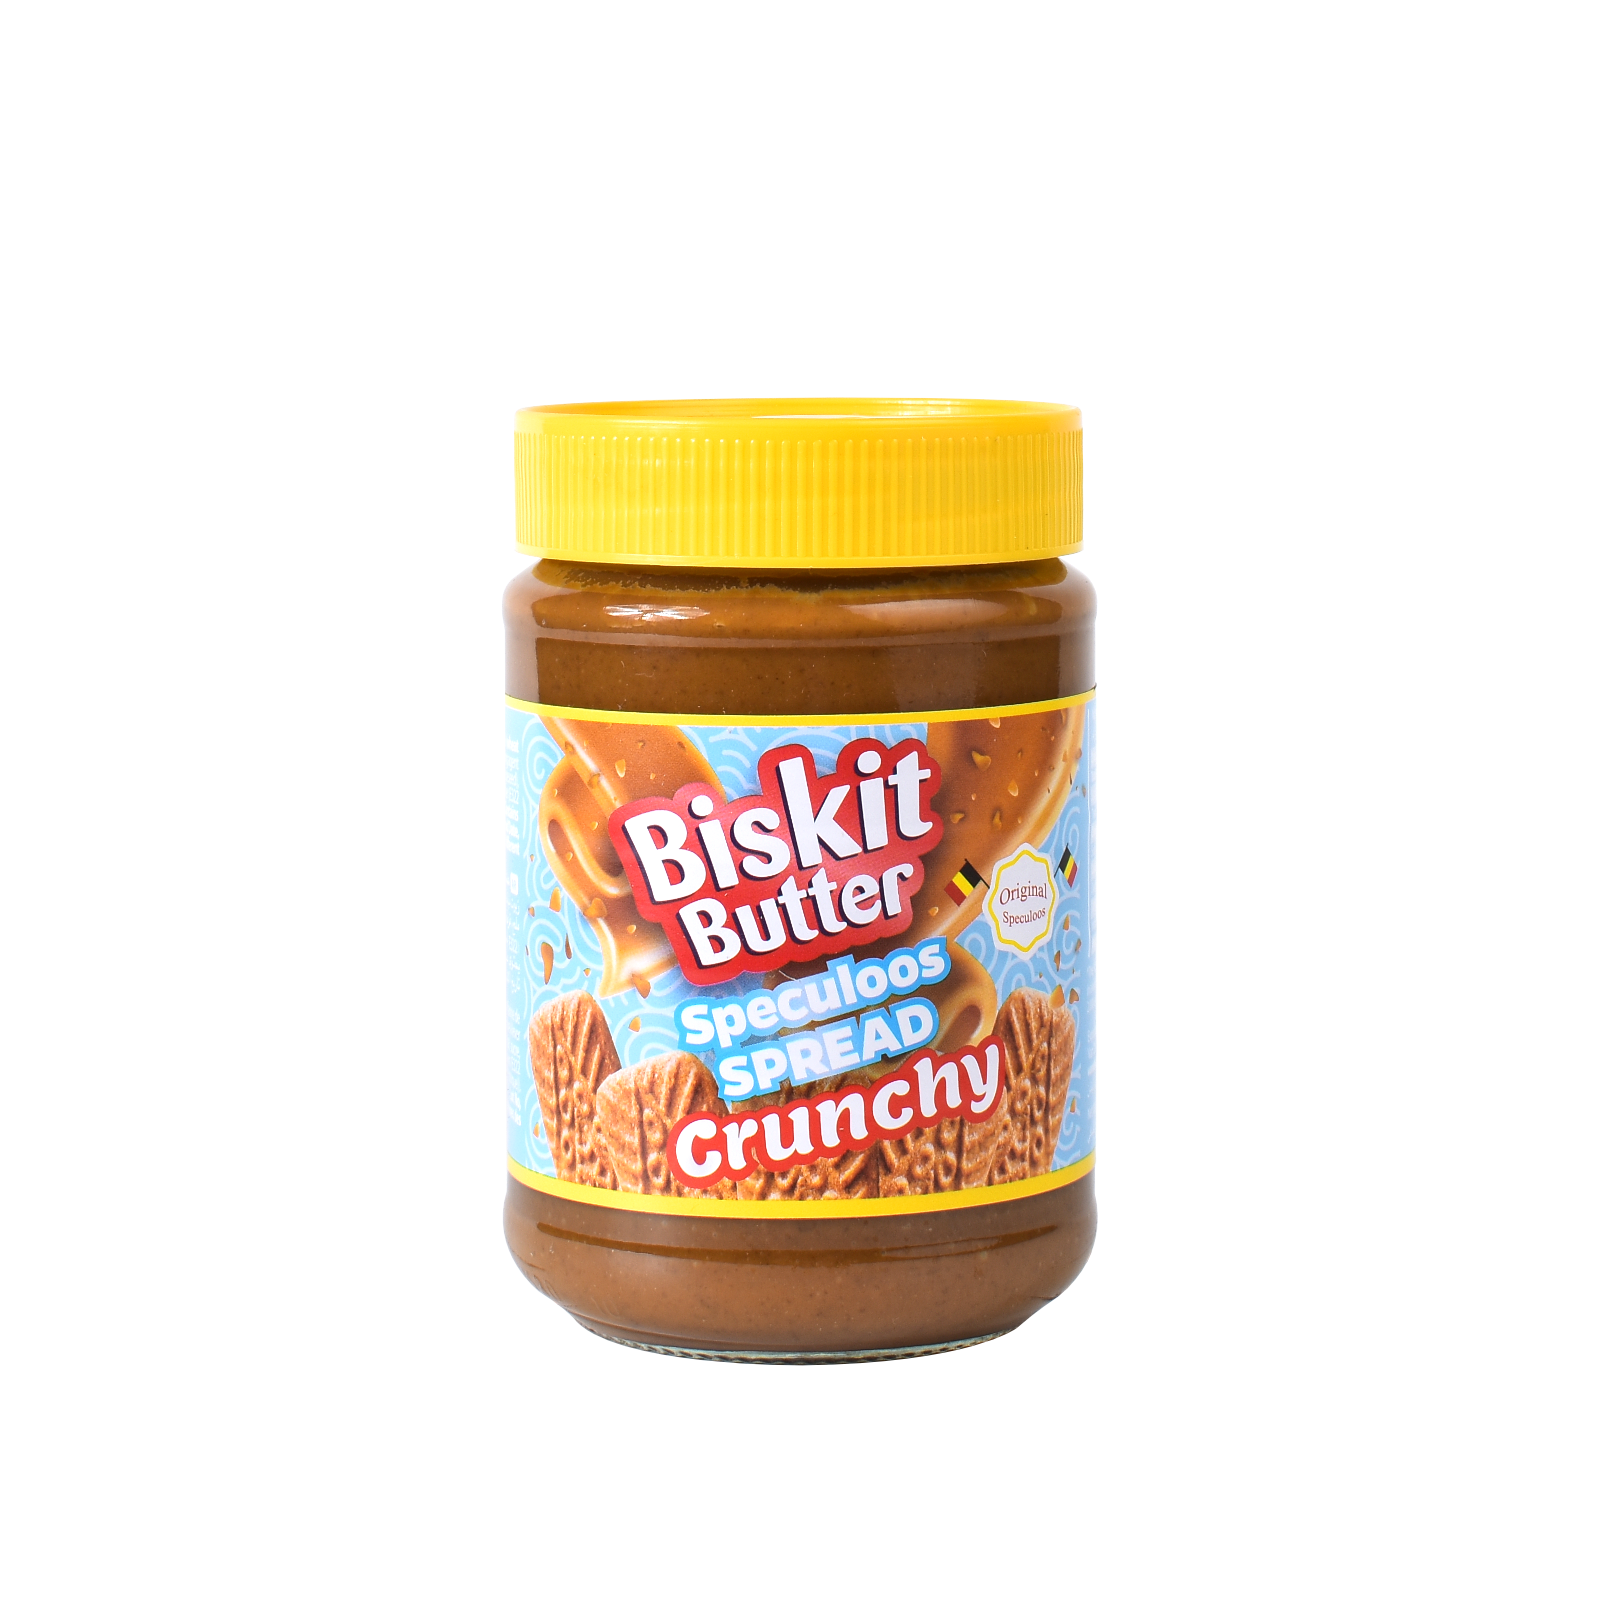 Biskit Butter Speculoos Spread Crunchy 400g.png